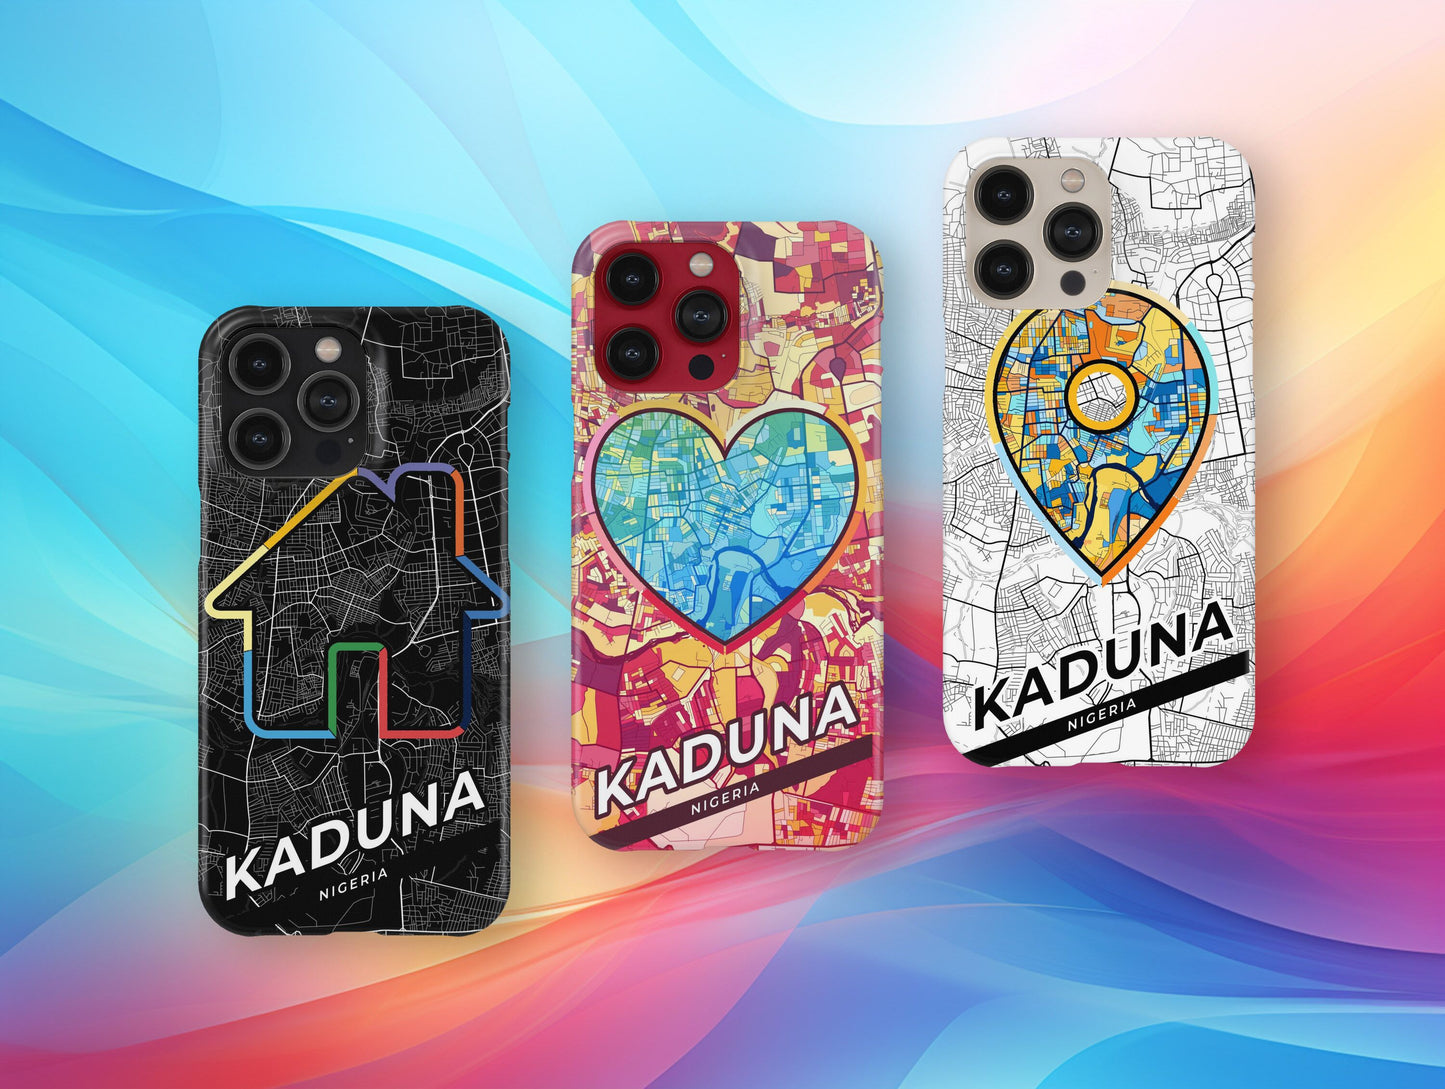 Kaduna Nigeria slim phone case with colorful icon. Birthday, wedding or housewarming gift. Couple match cases.